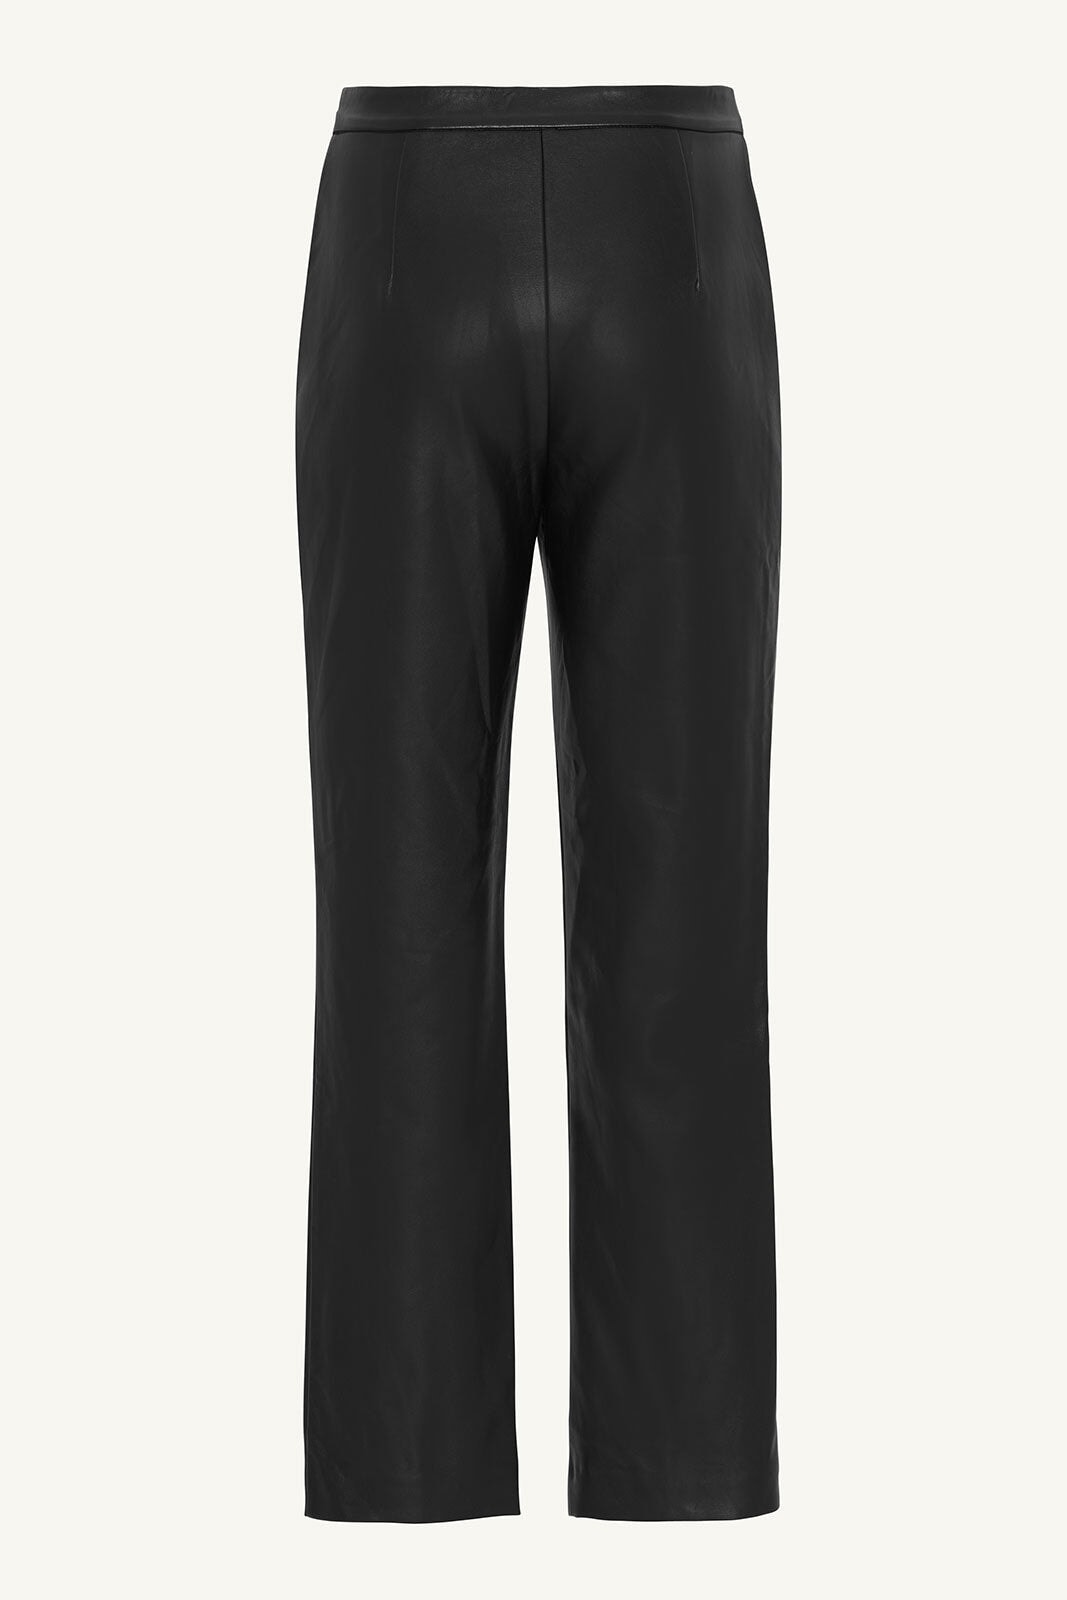 Vegan Leather Straight Leg Trousers - Black Clothing Veiled 